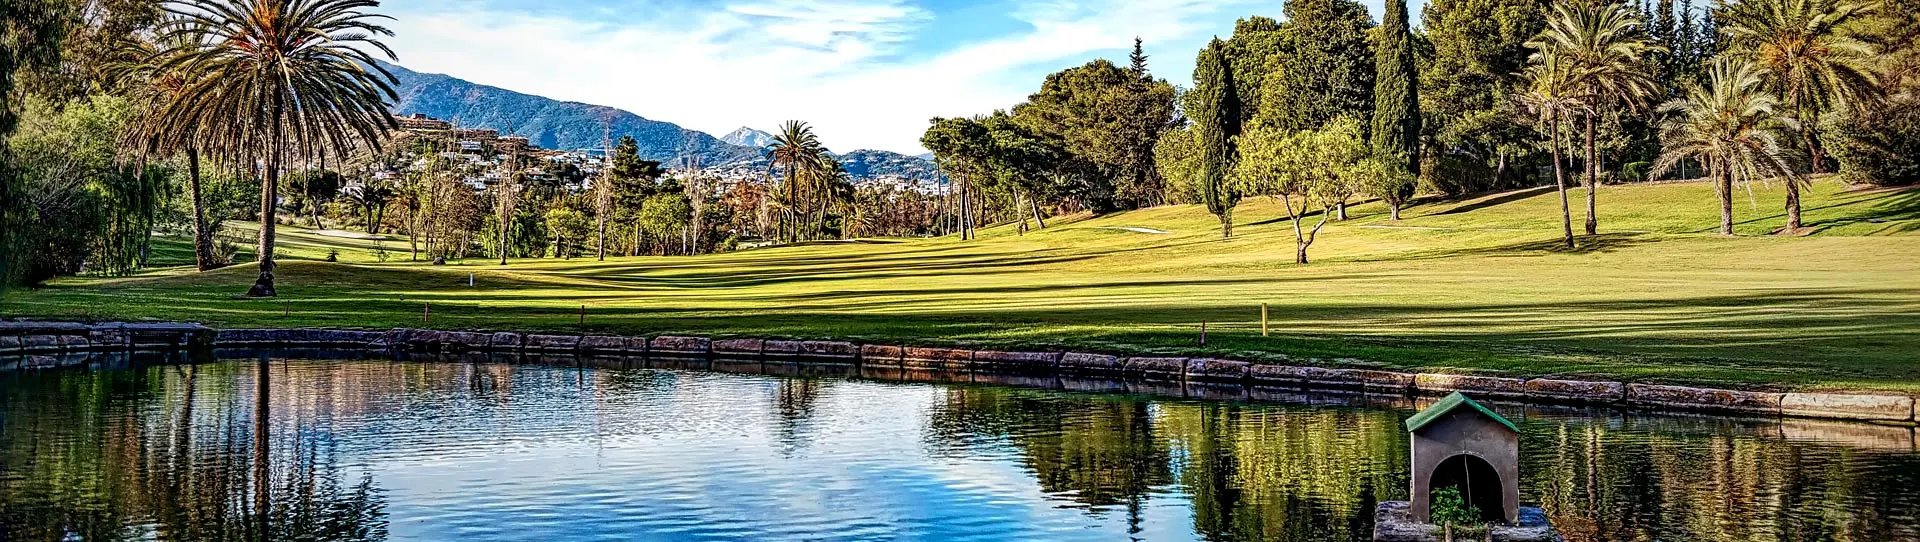 Spain golf courses - El Paraiso Golf - Photo 2